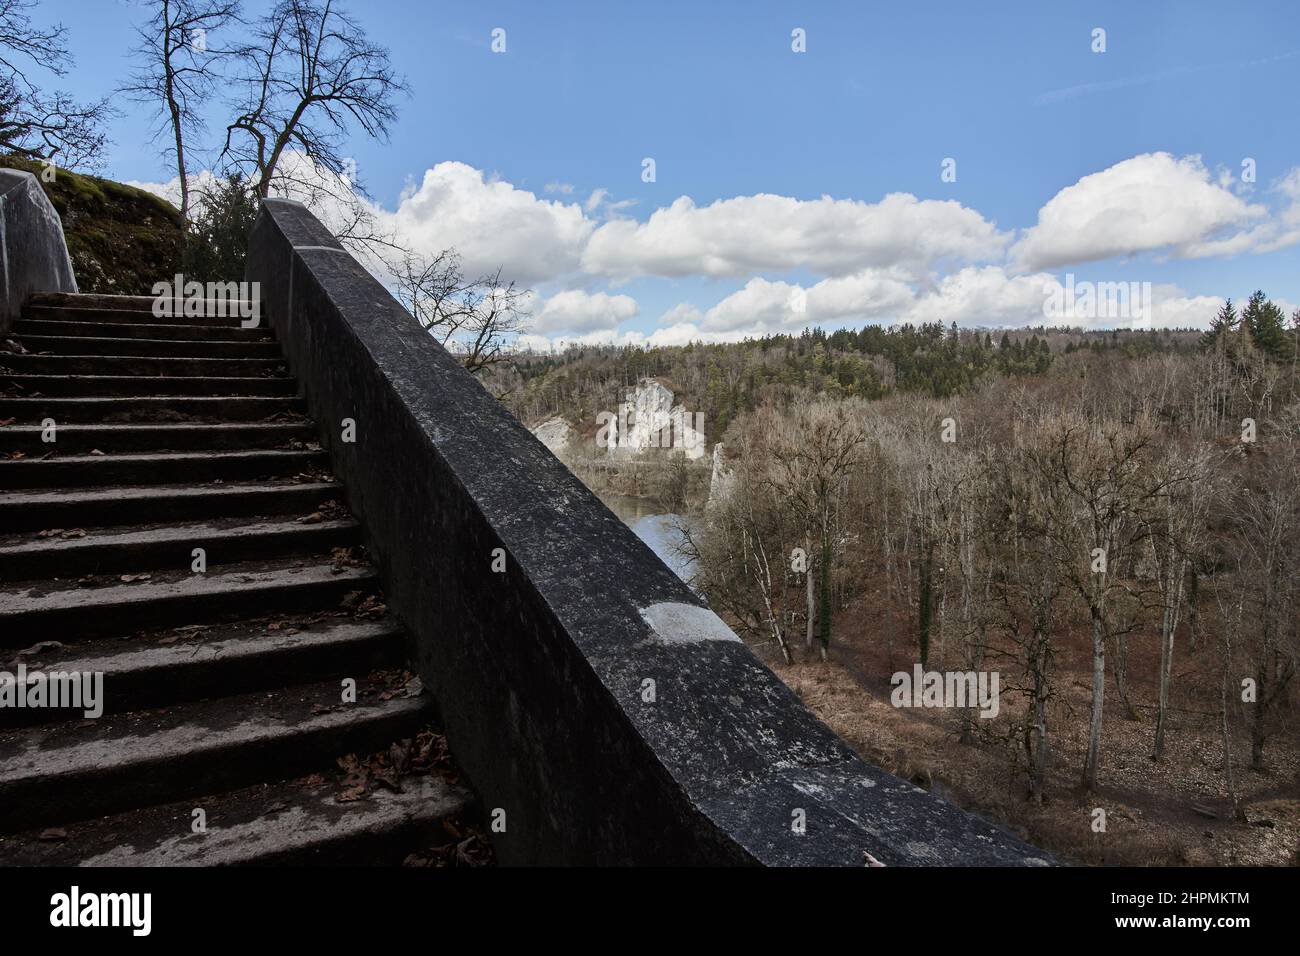 Devil's bridge (Teufelsbrücke) and Upper Danube Valley in Inzigkofen, Sigmaringen, Germany, Europe. Stock Photo